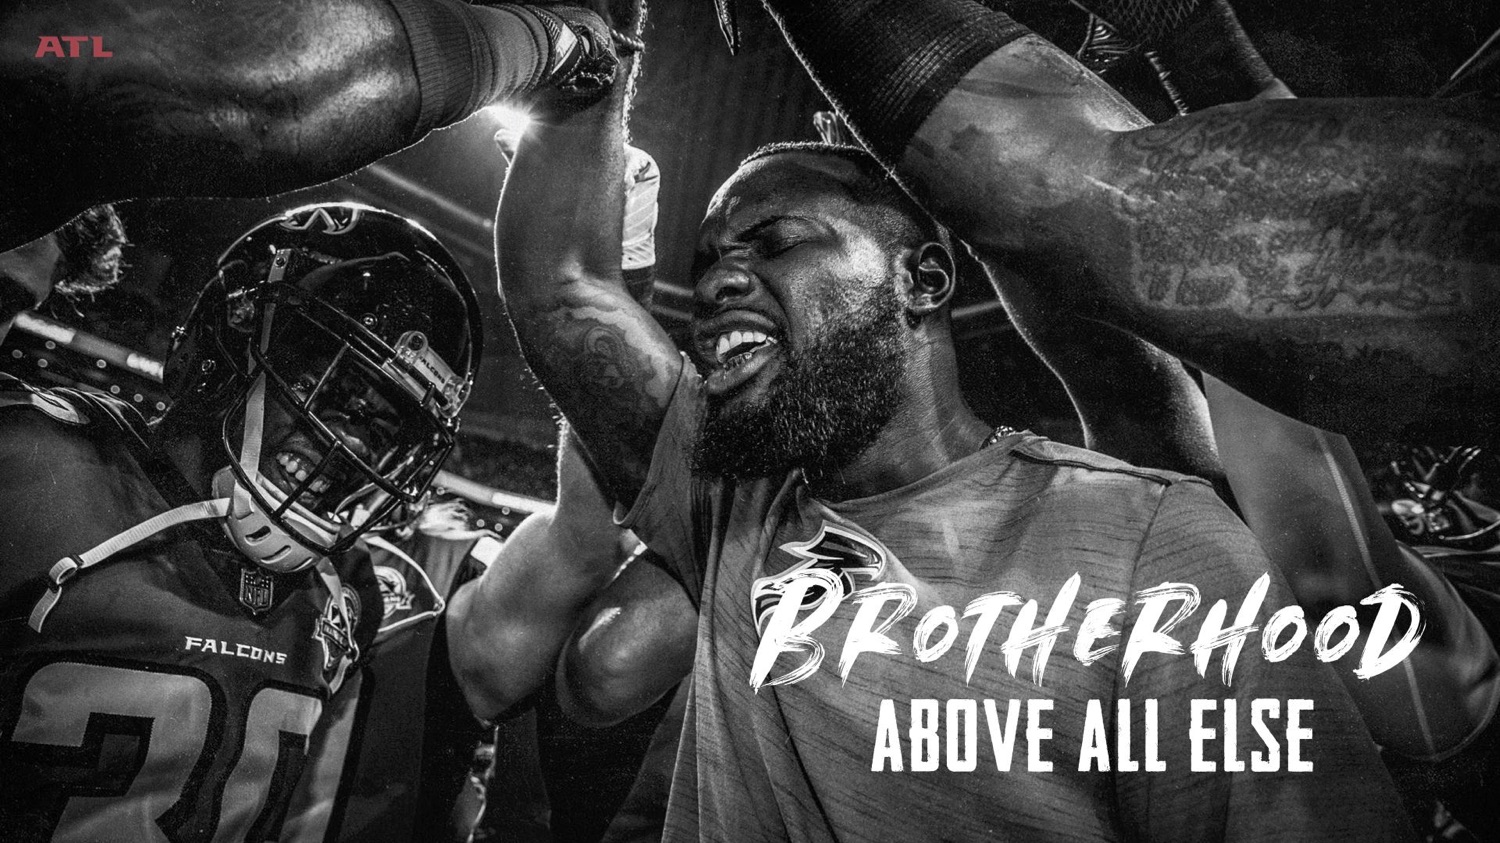 Brotherhood Above All Else.